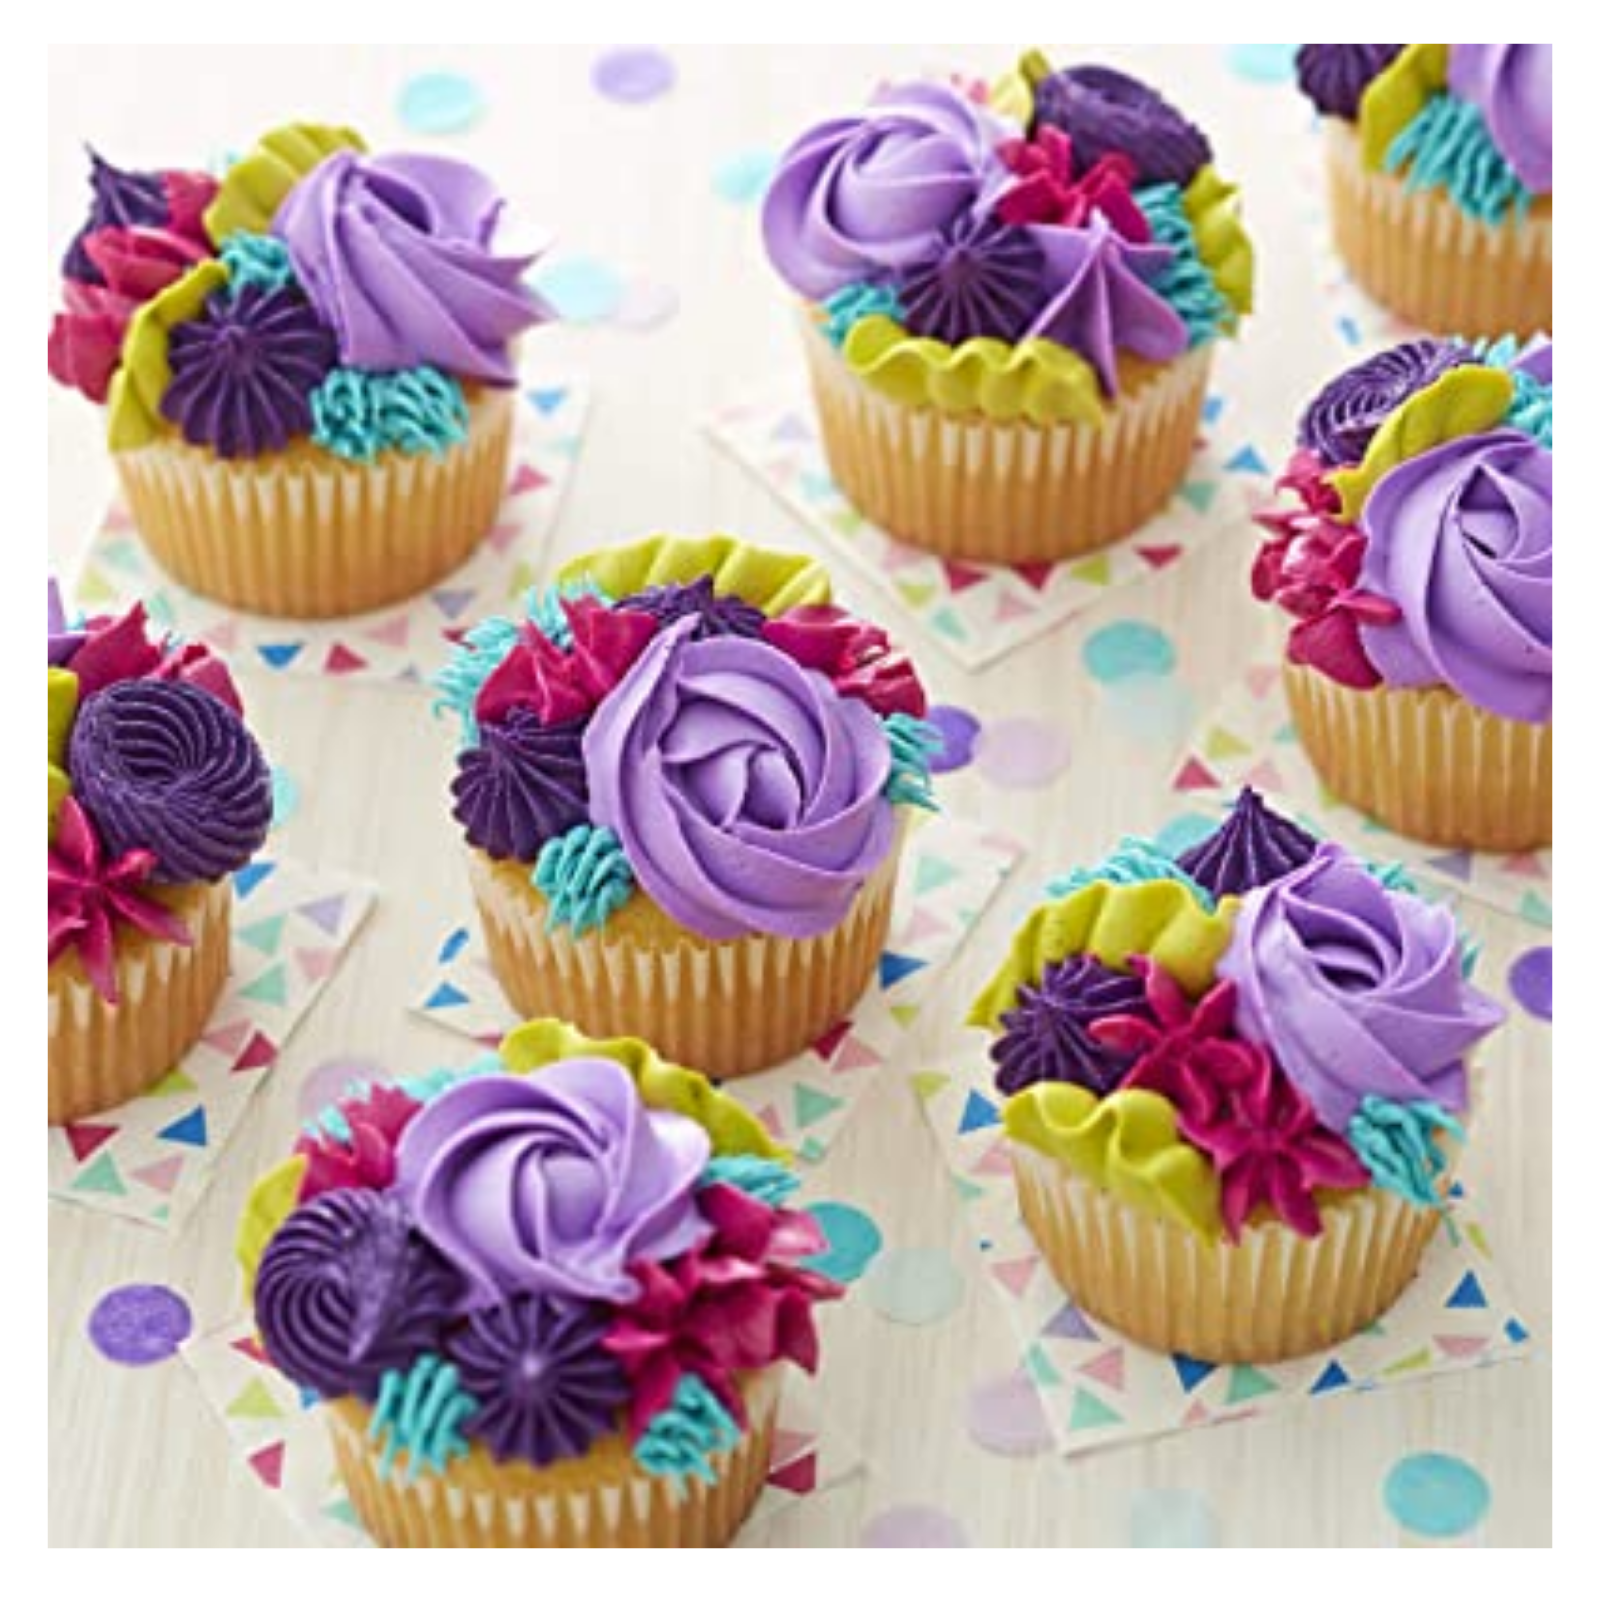 Wilton 55-Piece Decorating Piping Tips Set, Cake & Cupcake Baking, Nozzles